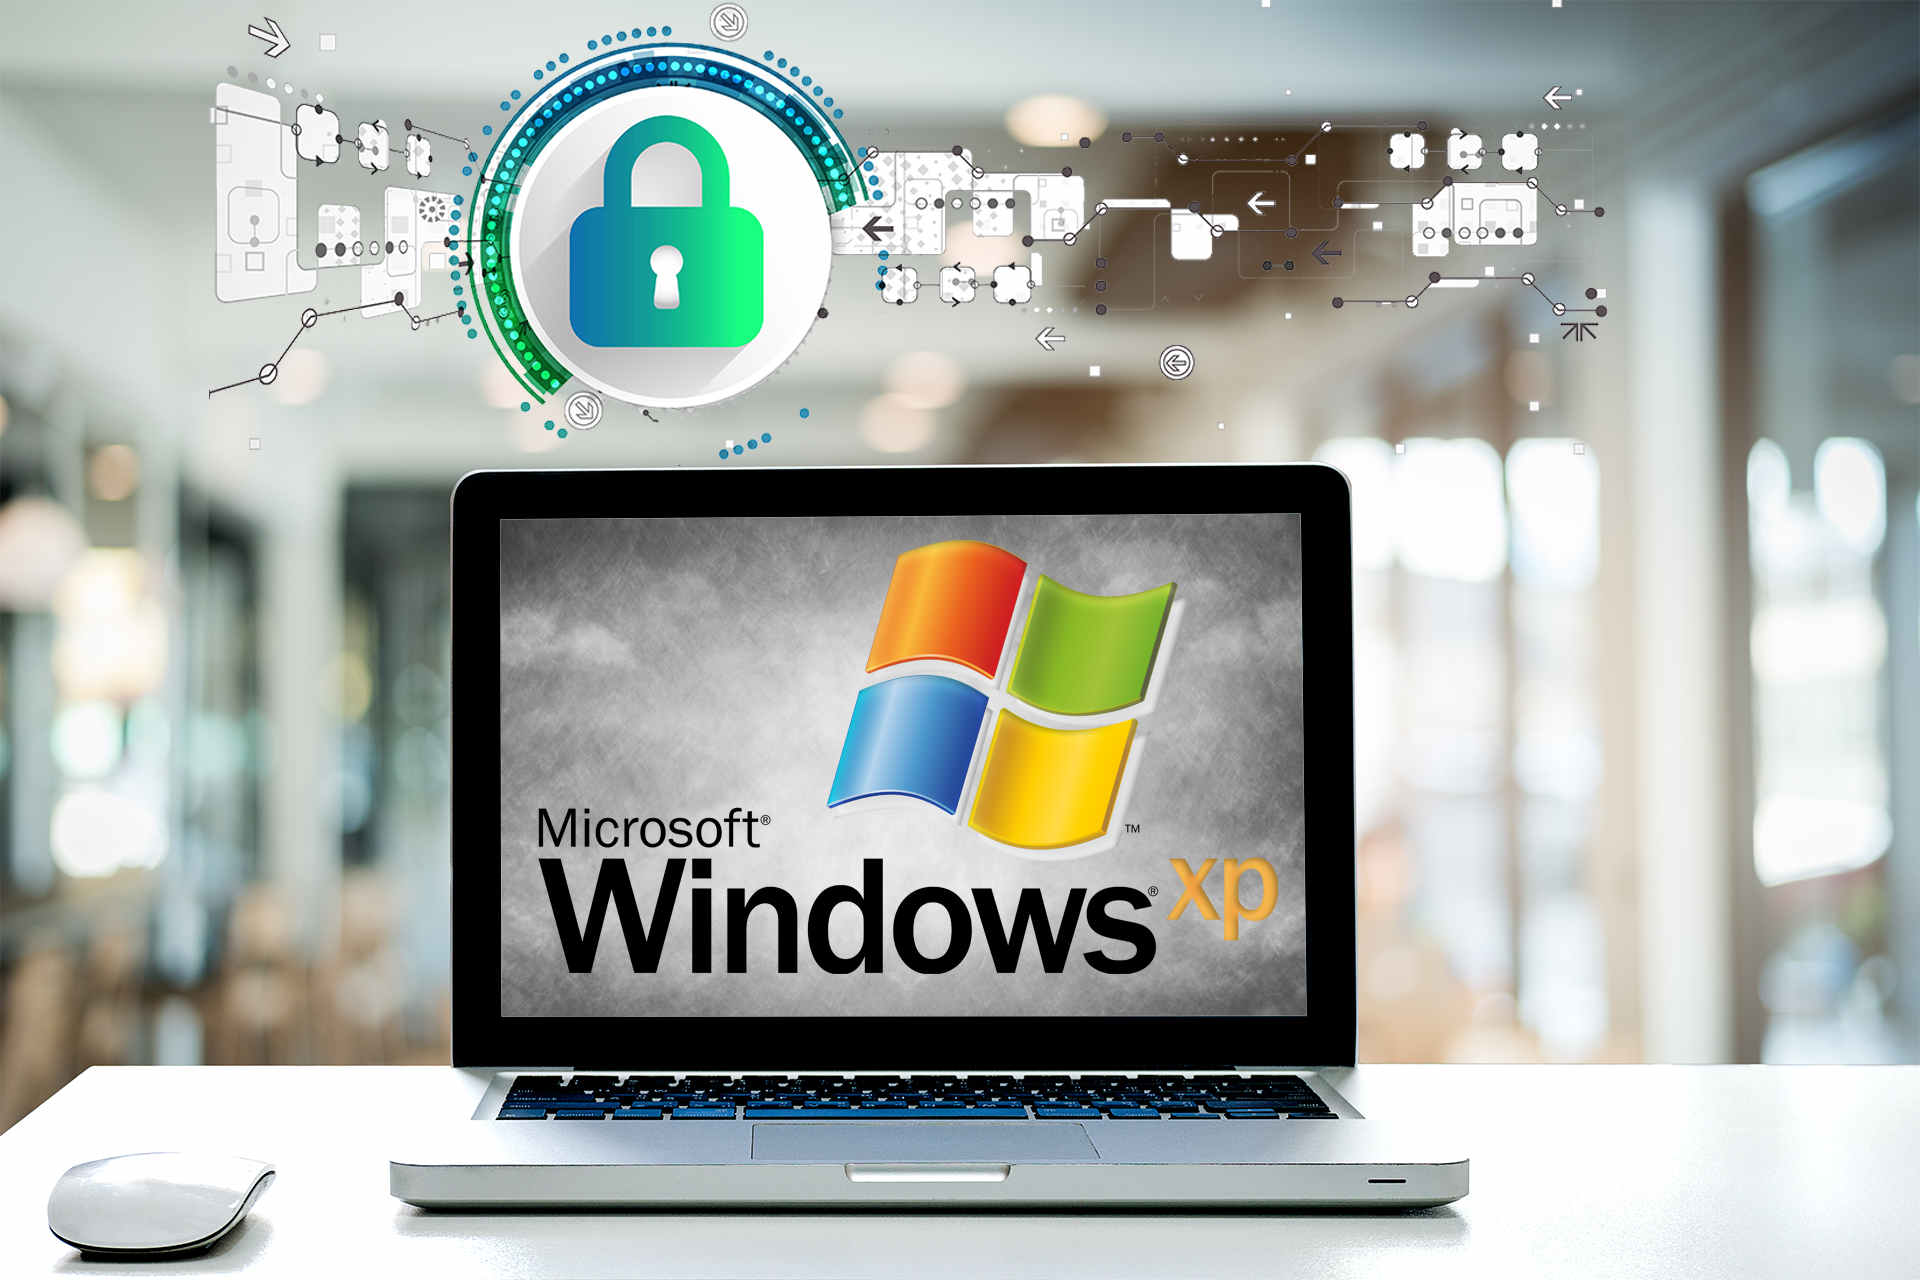 antivirus tools for Windows XP